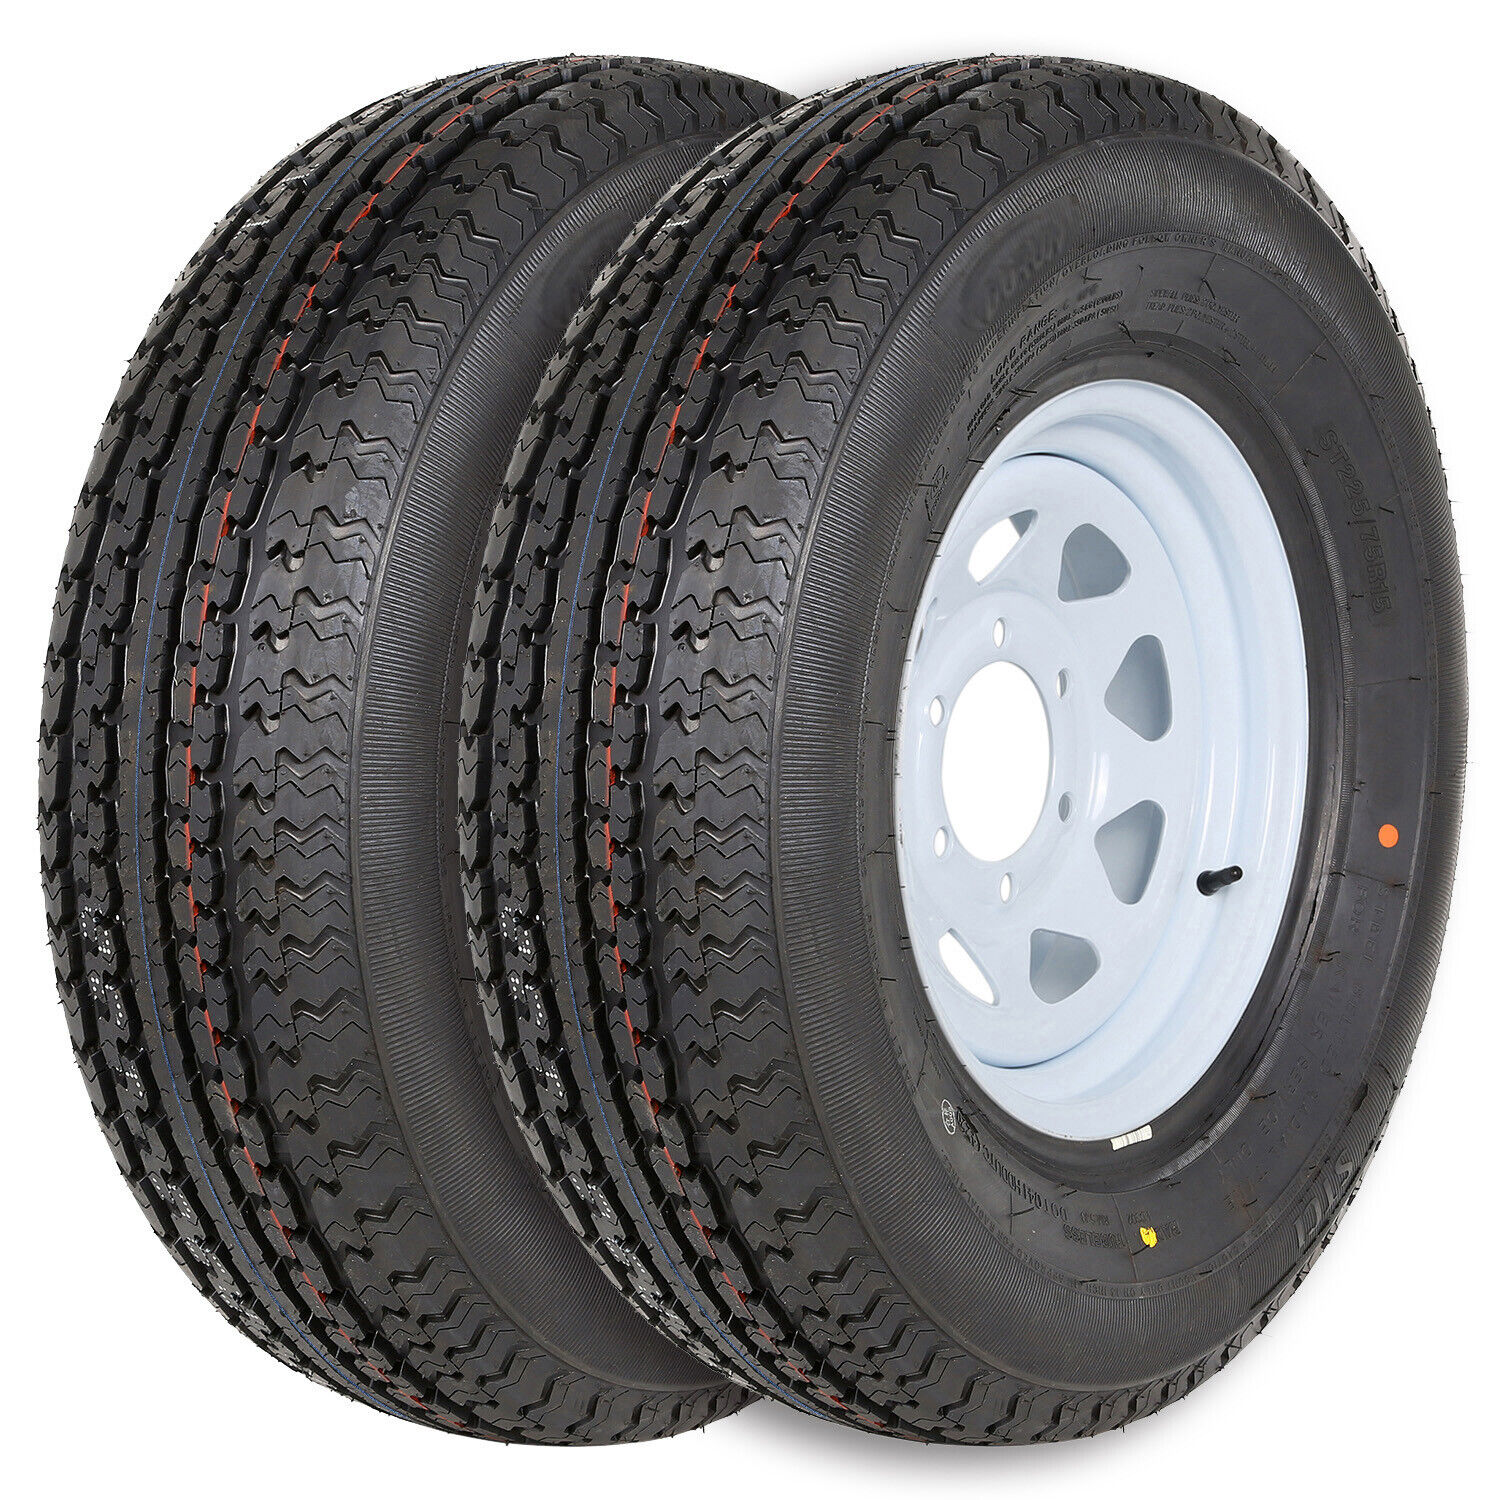 2X ST225/75R15 Radial Trailer Tire w/ 15x6 inch Wheel, 6 Lug 10-Ply Load Range E